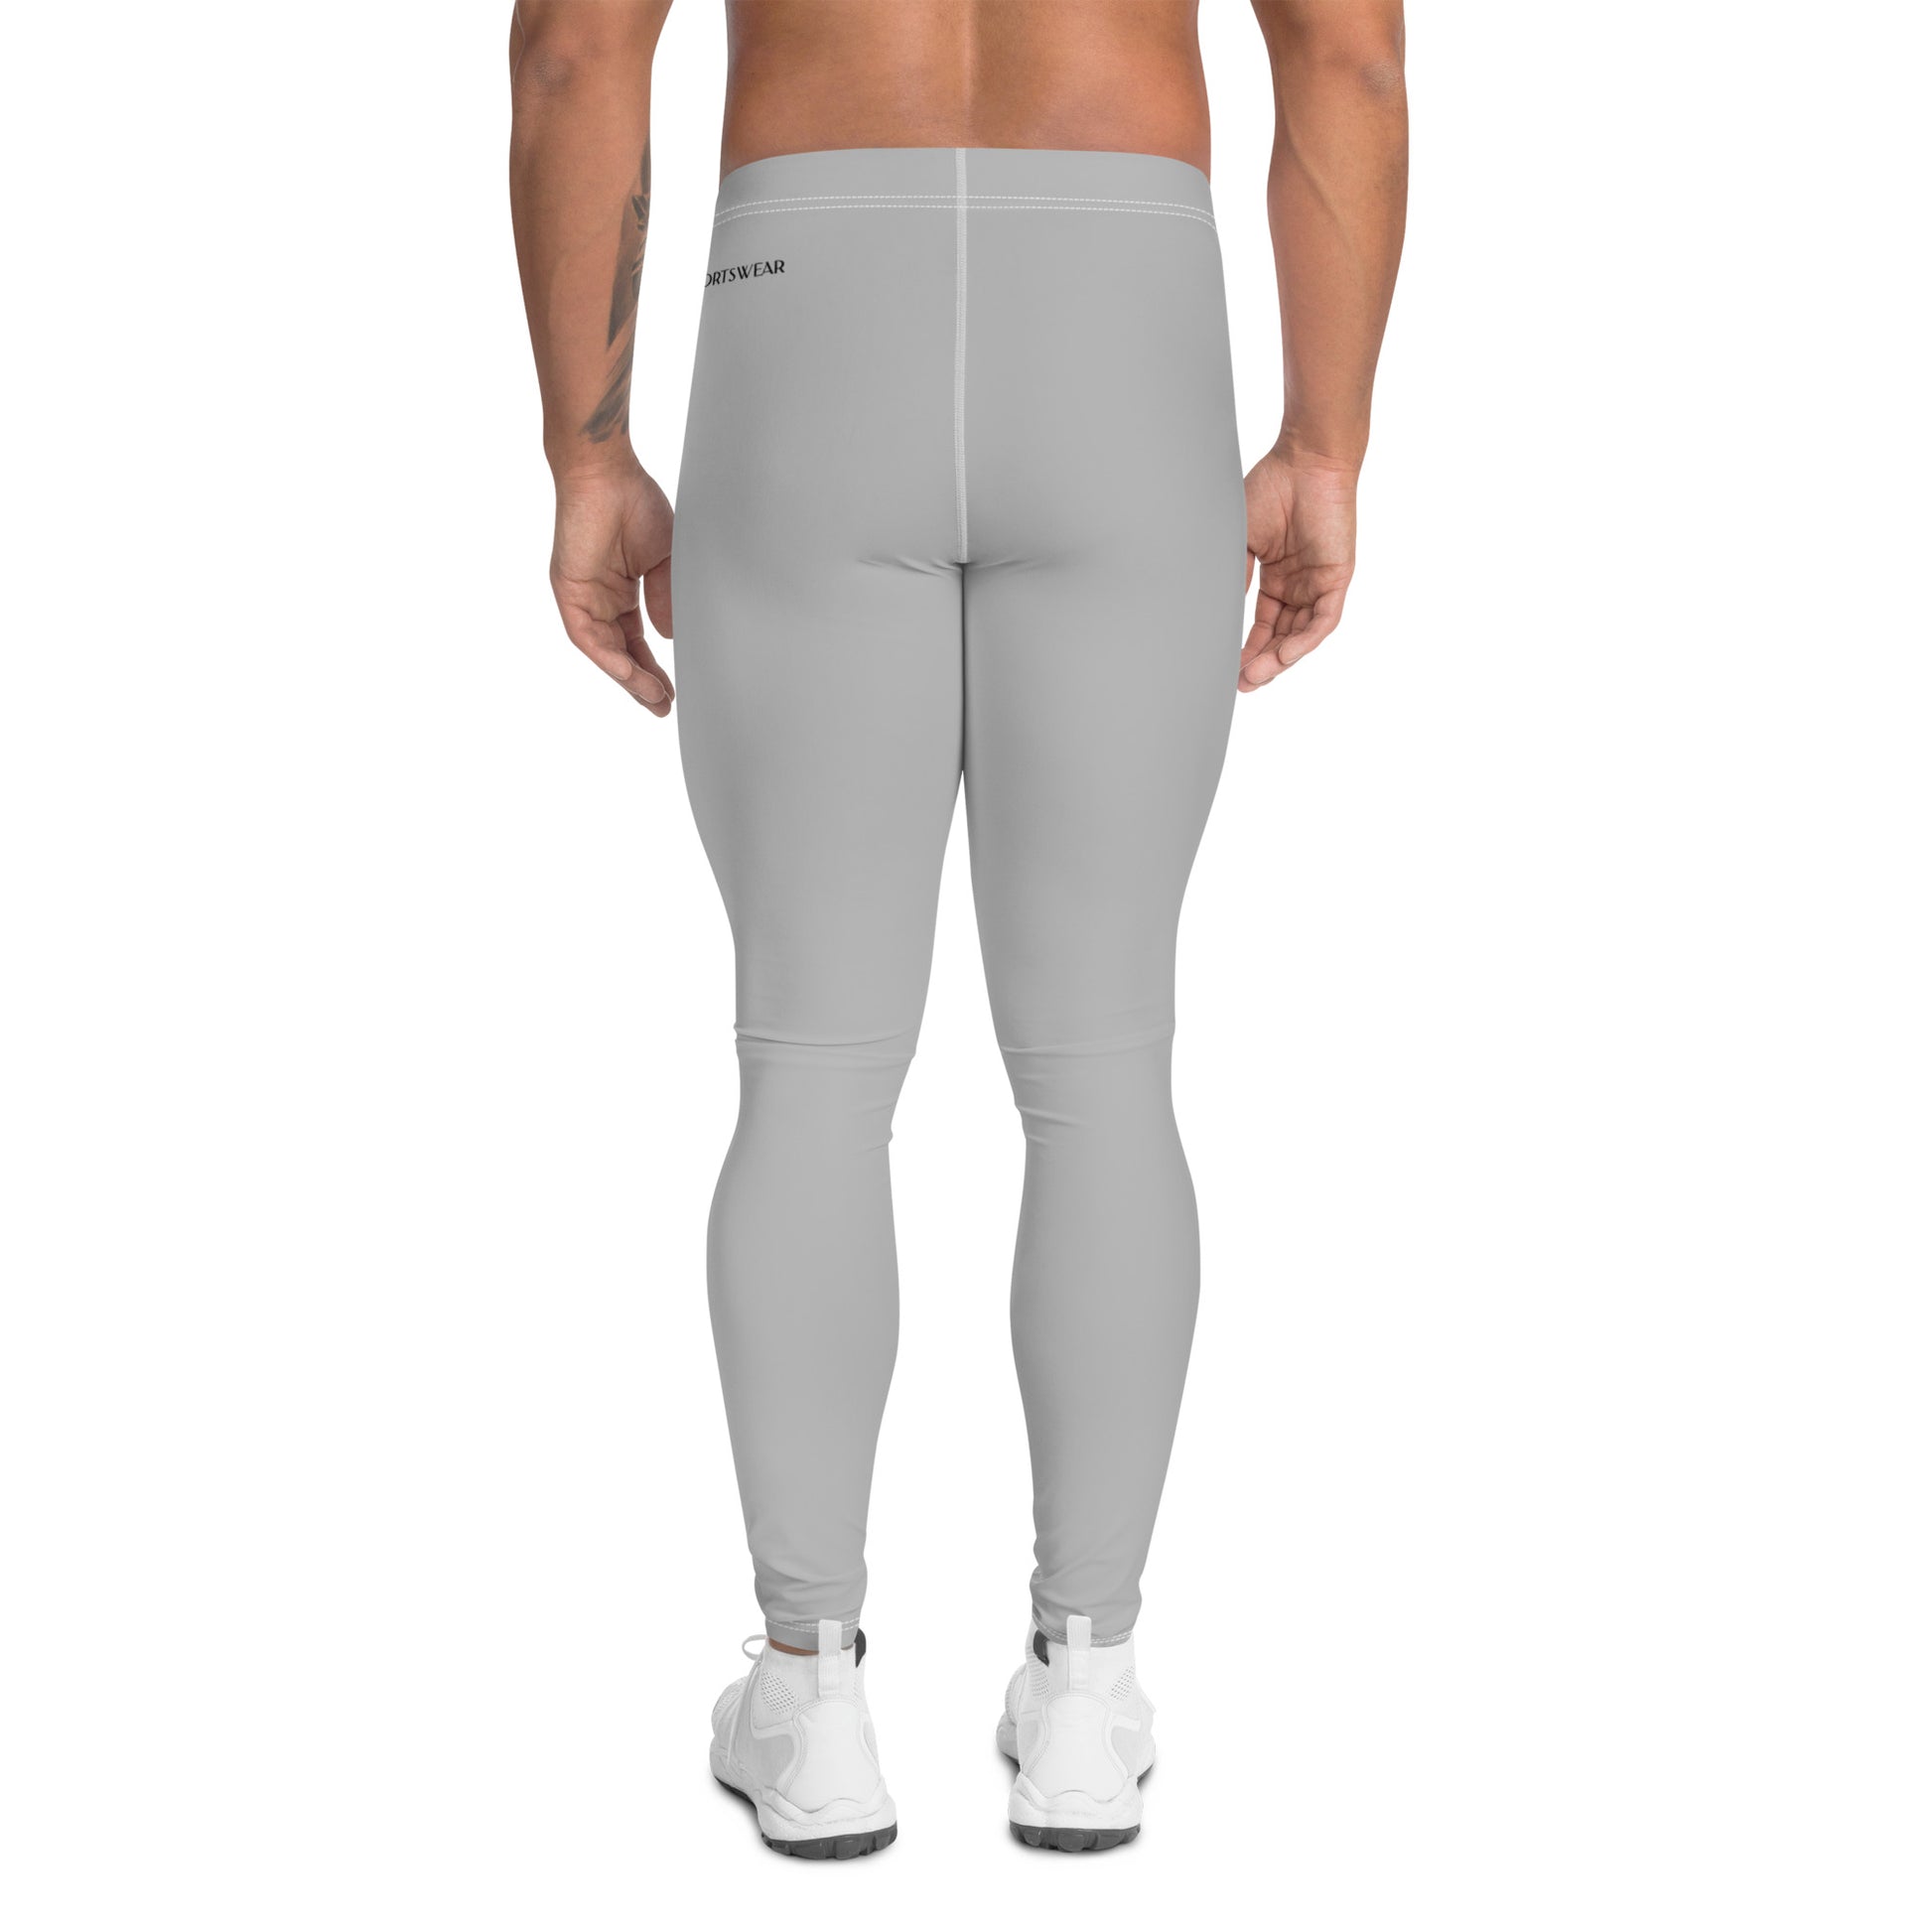  Humble Sportswear, men's leggings, active performance leggings, compression leggings for men, Color Match leggings